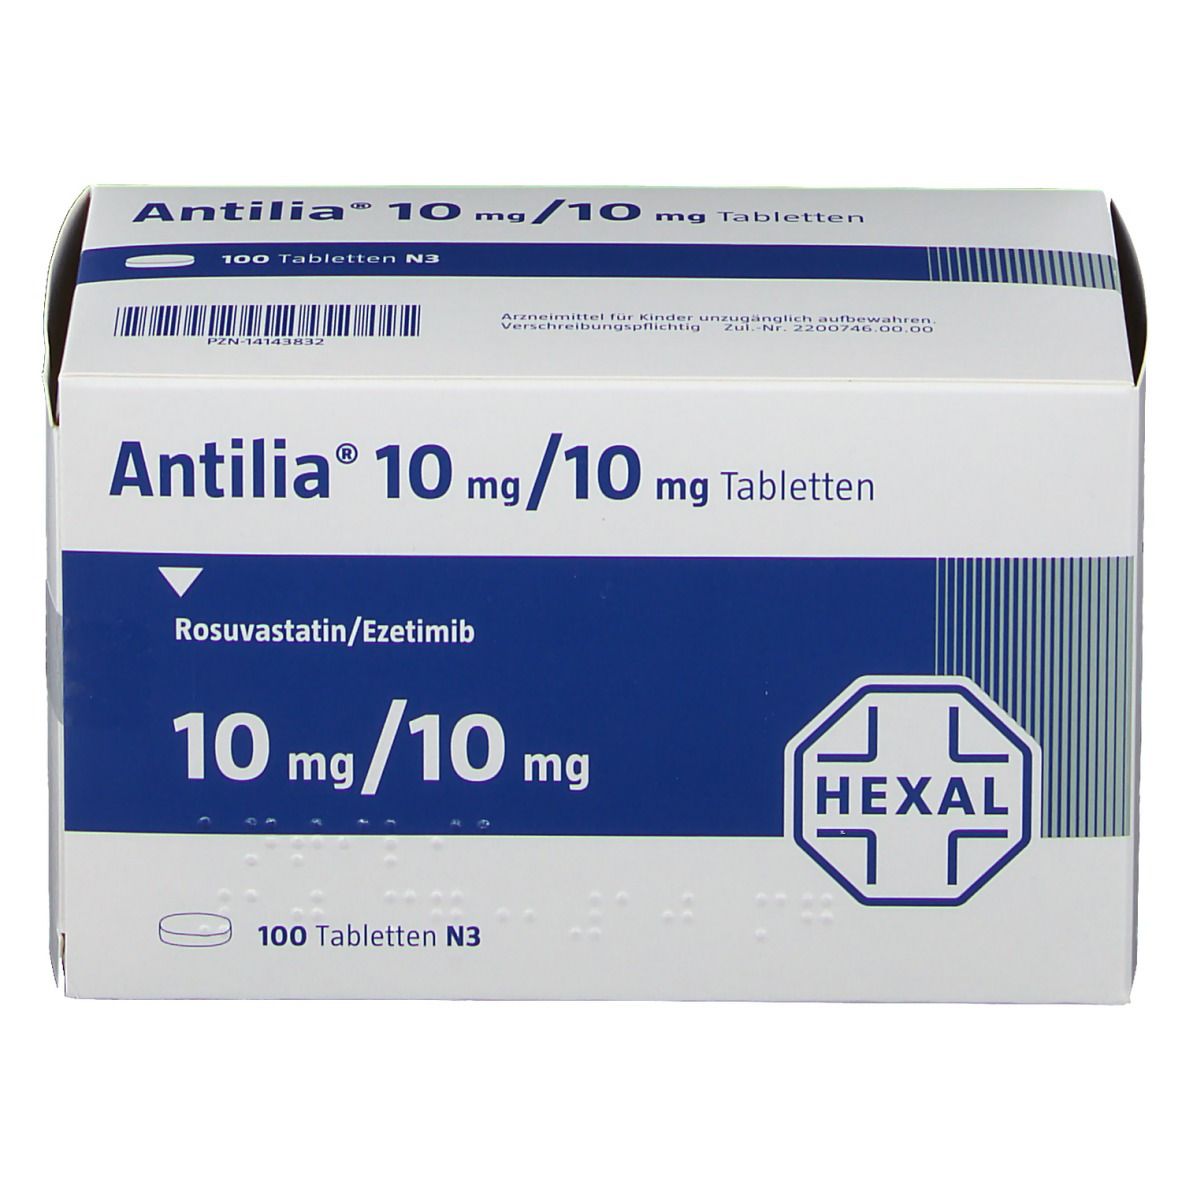 Antilia® 10 mg/10 mg